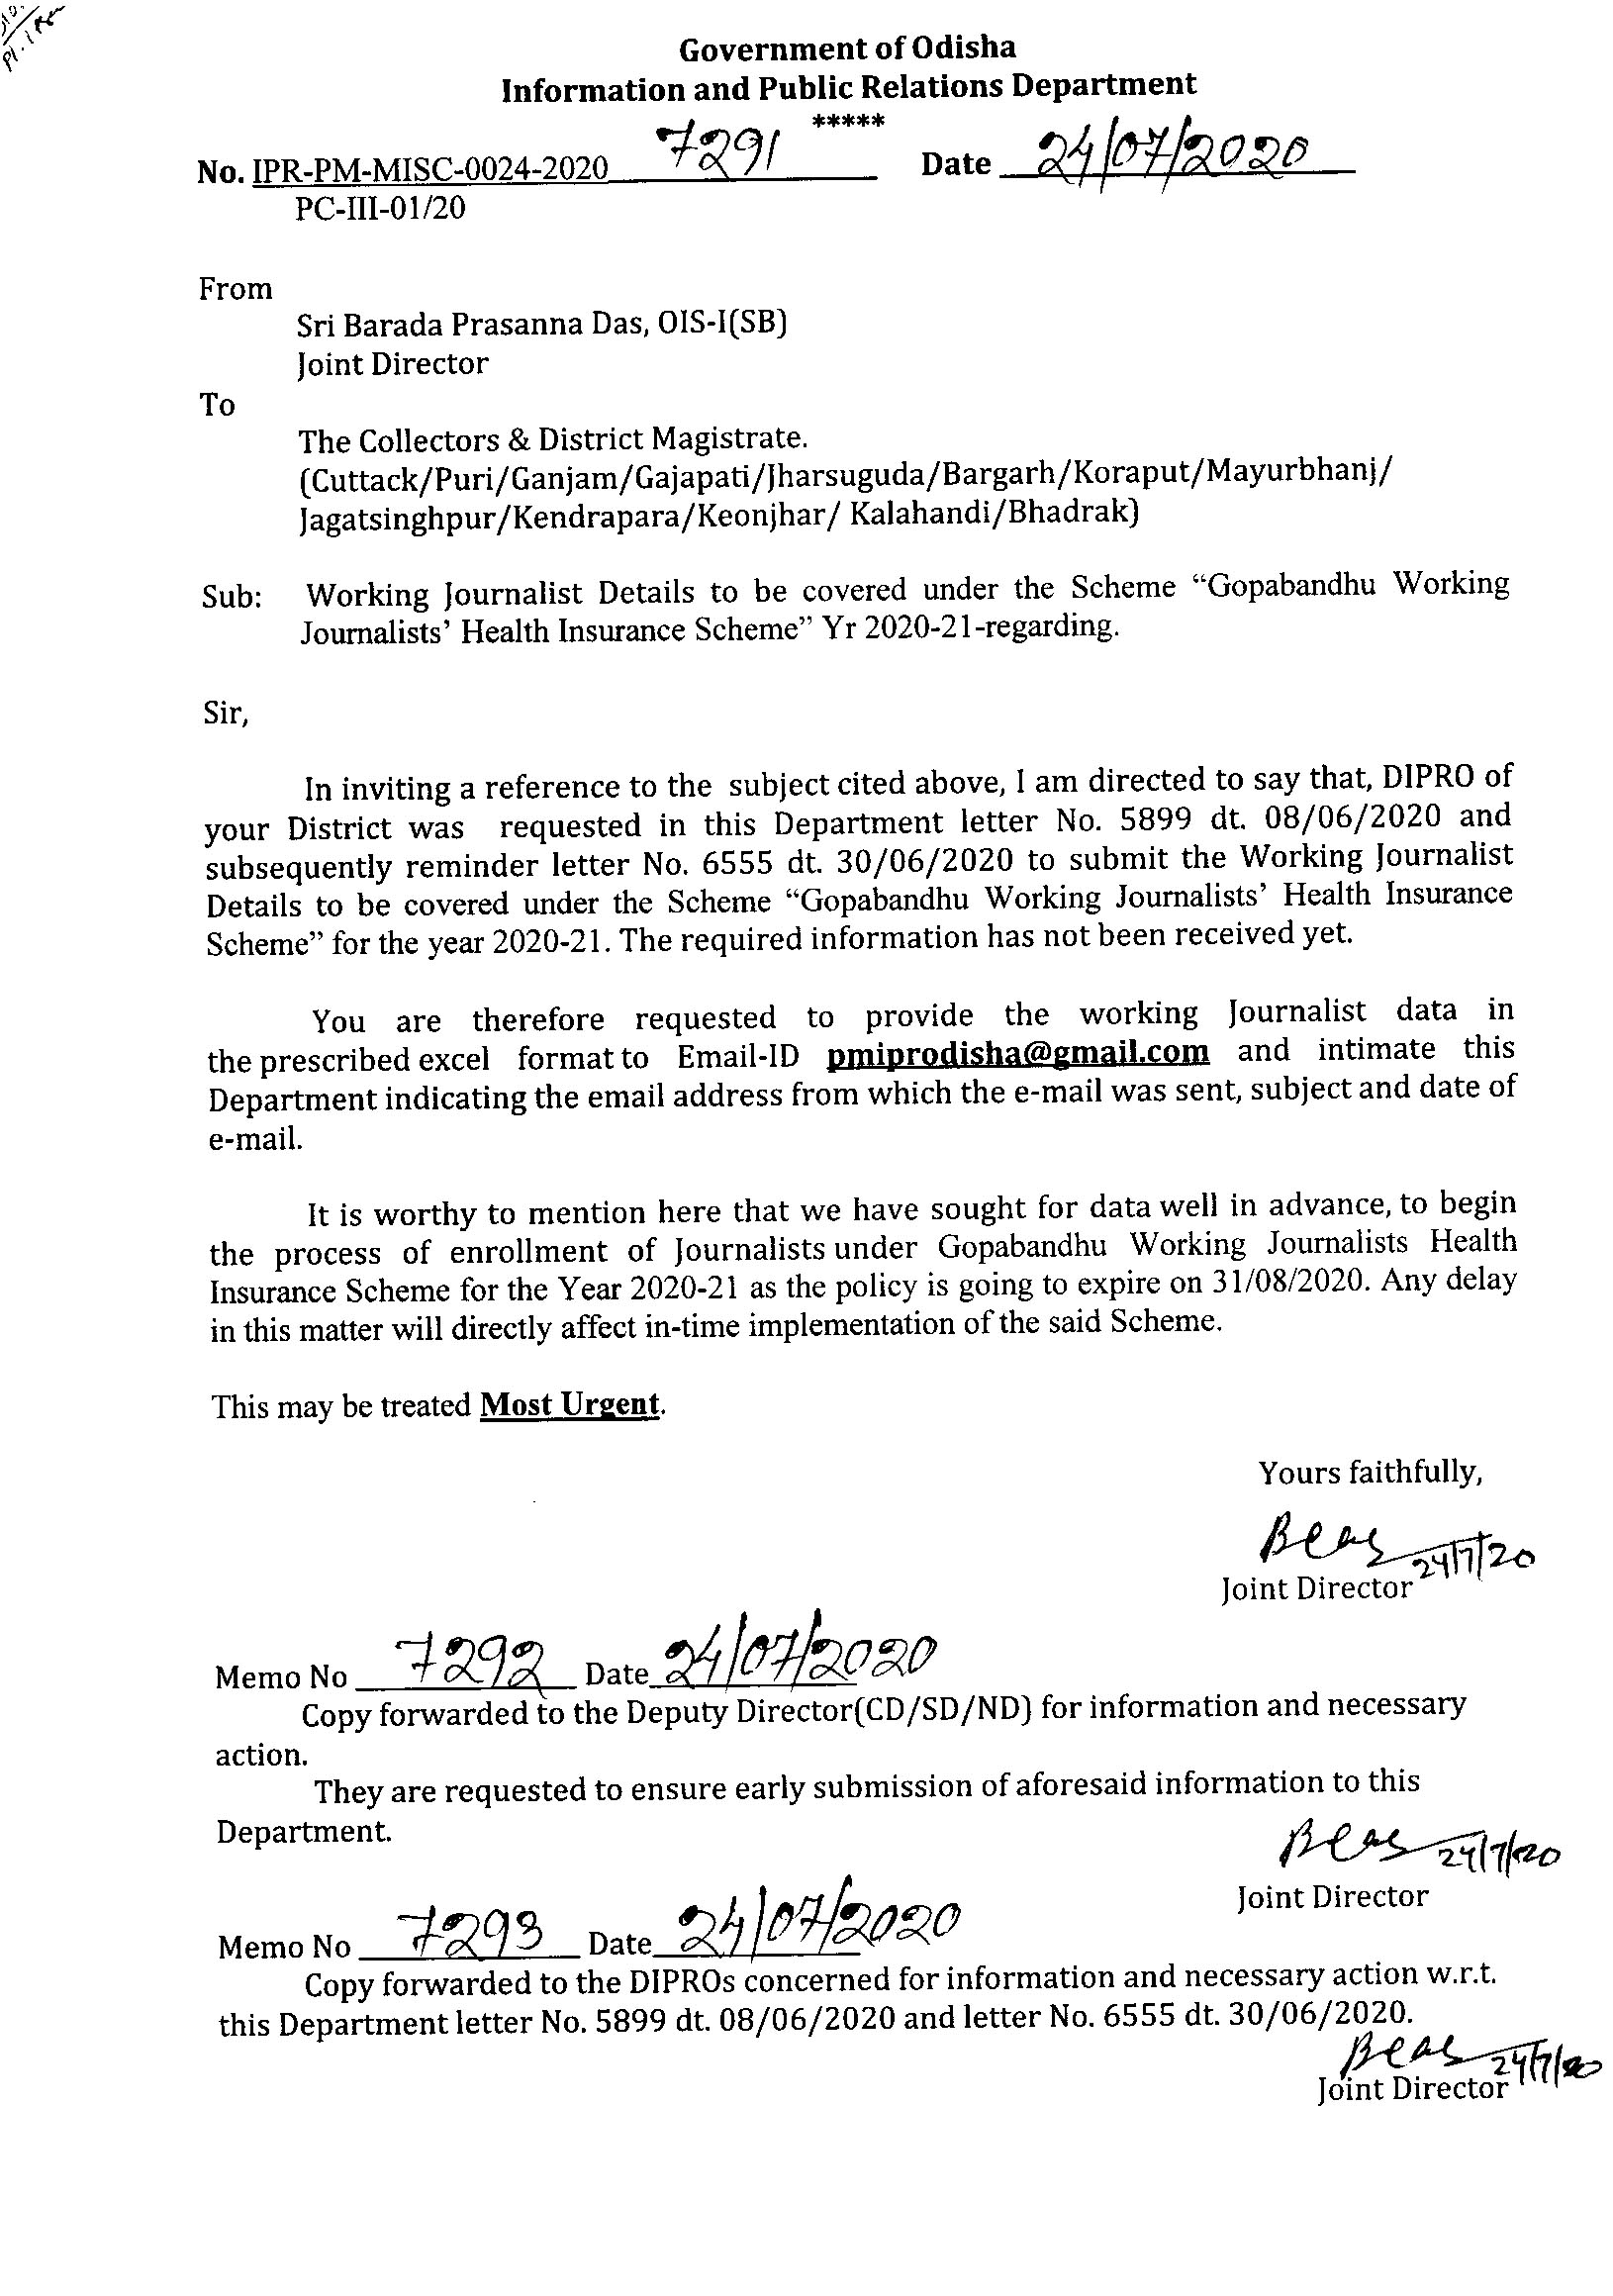 Journalist Insurance IPR Odisha letter 24 July 2020